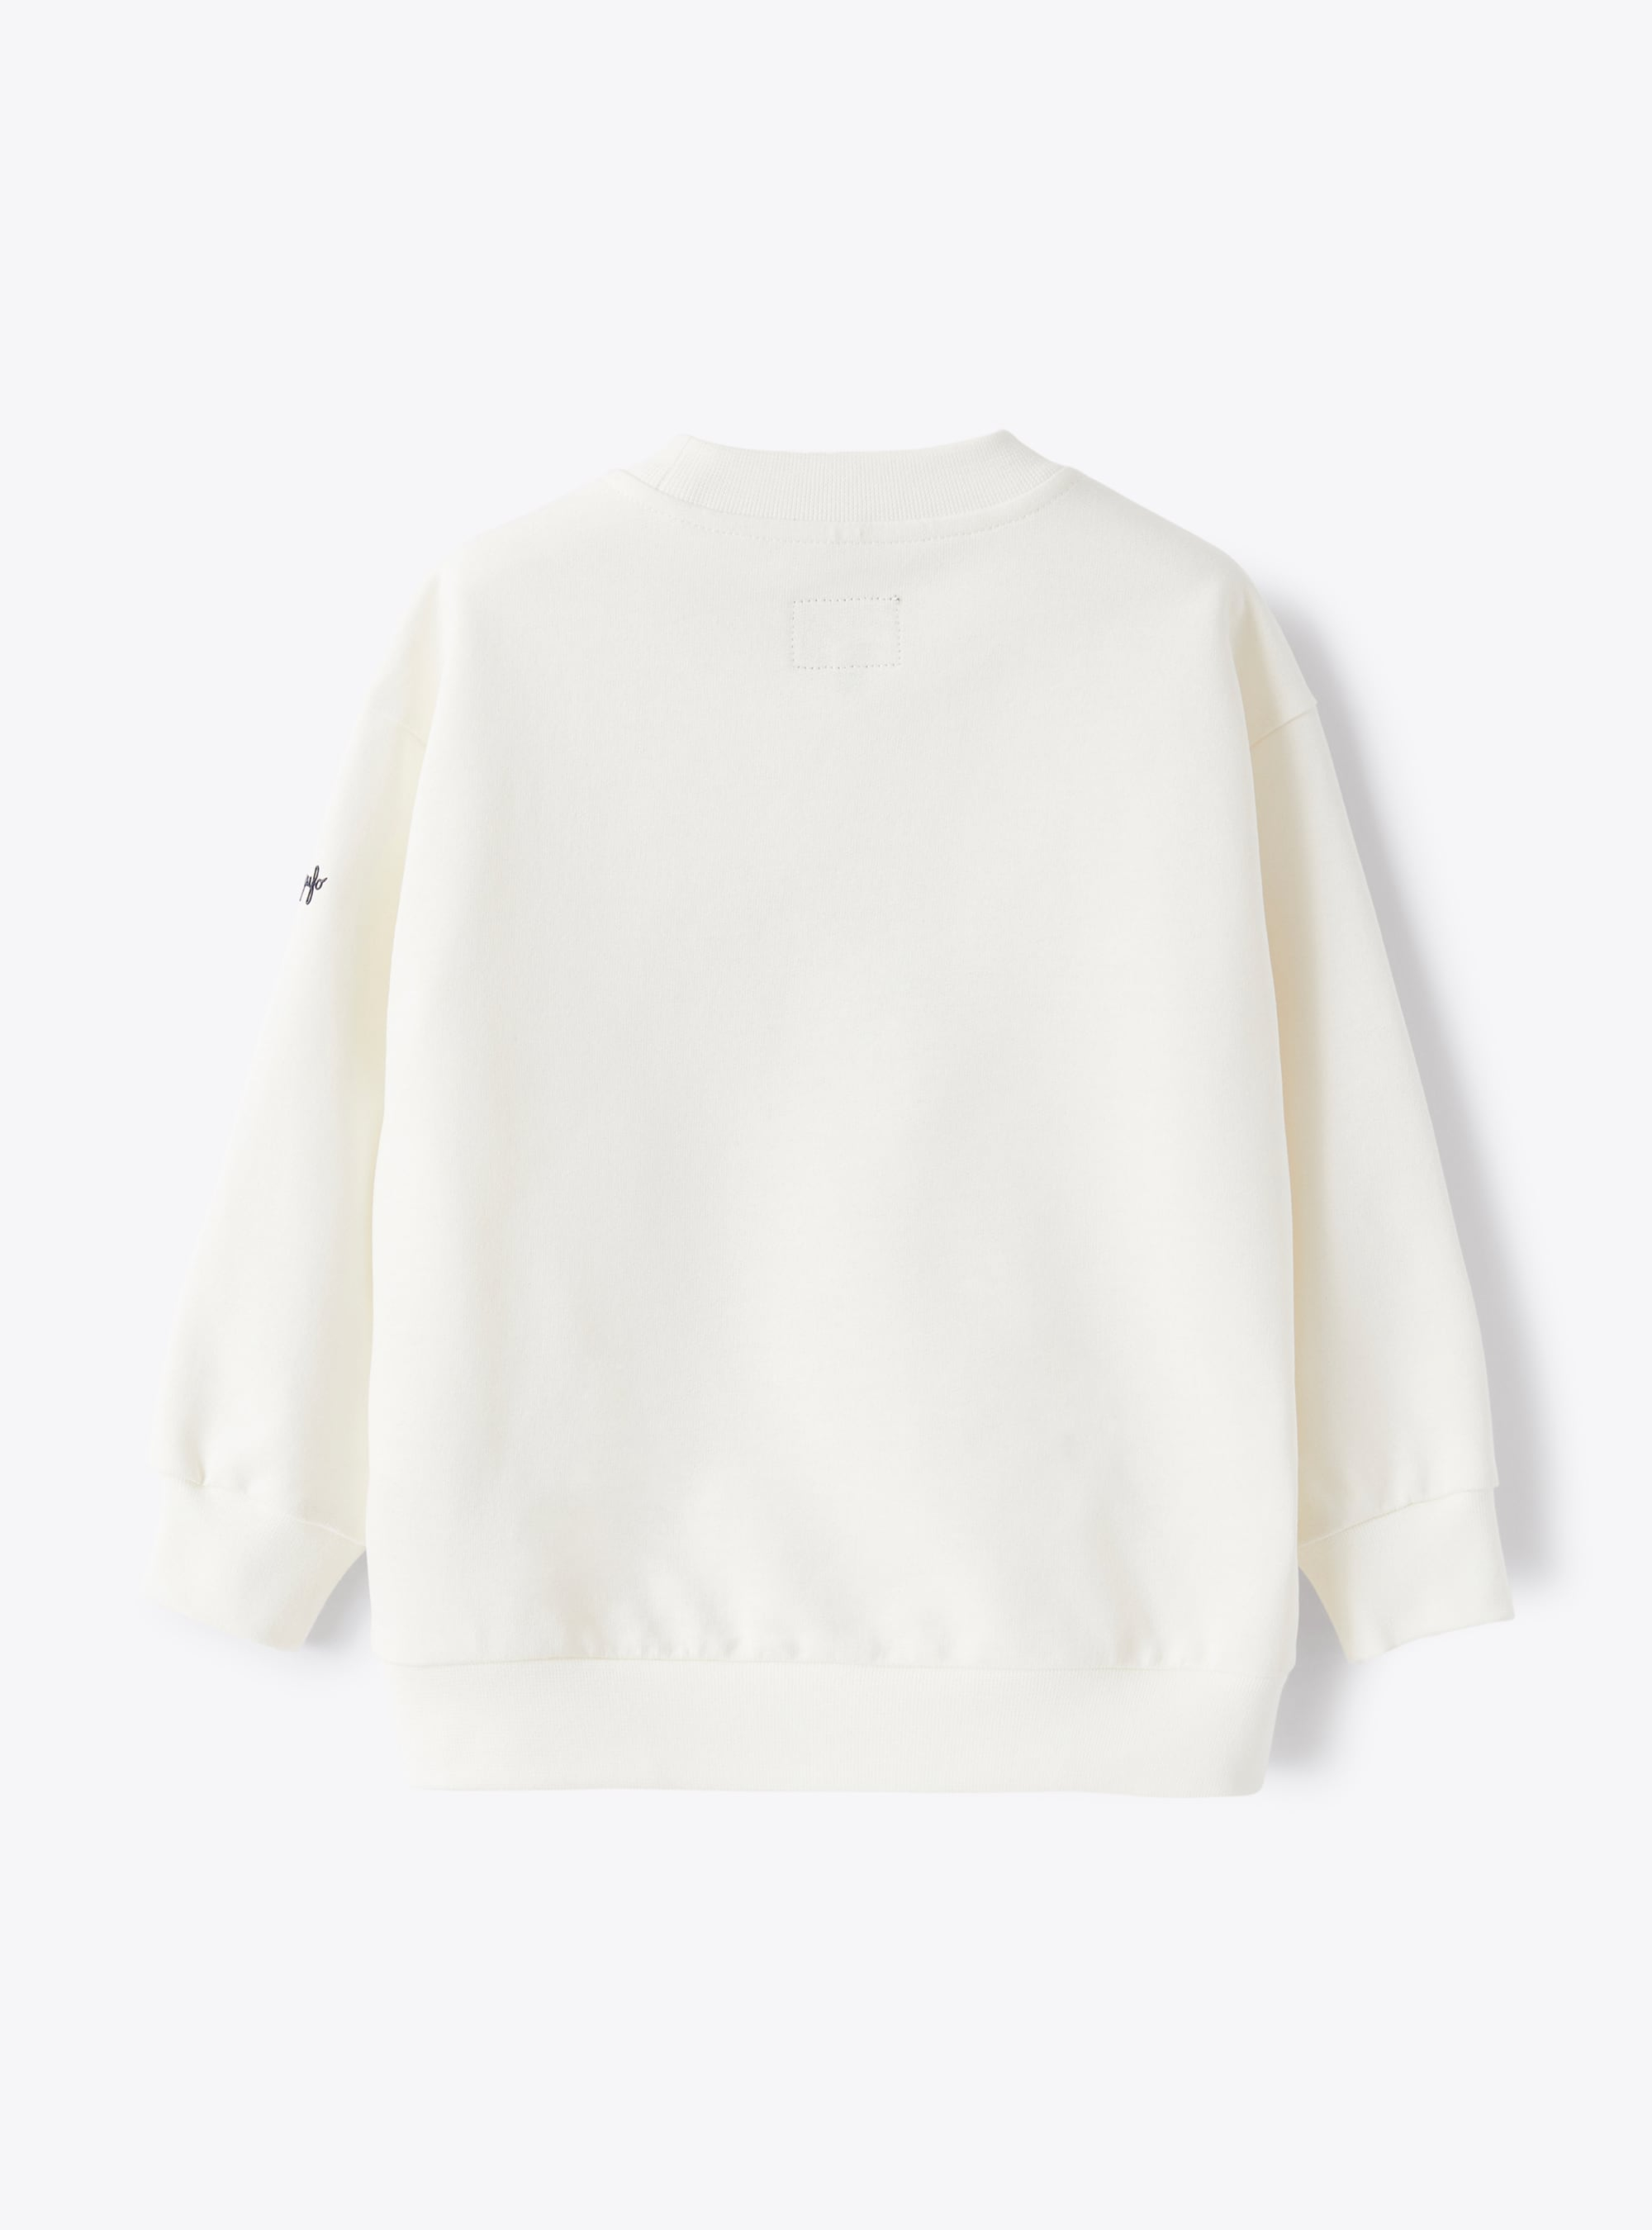 White sweatshirt with French bulldog embroidery - White | Il Gufo